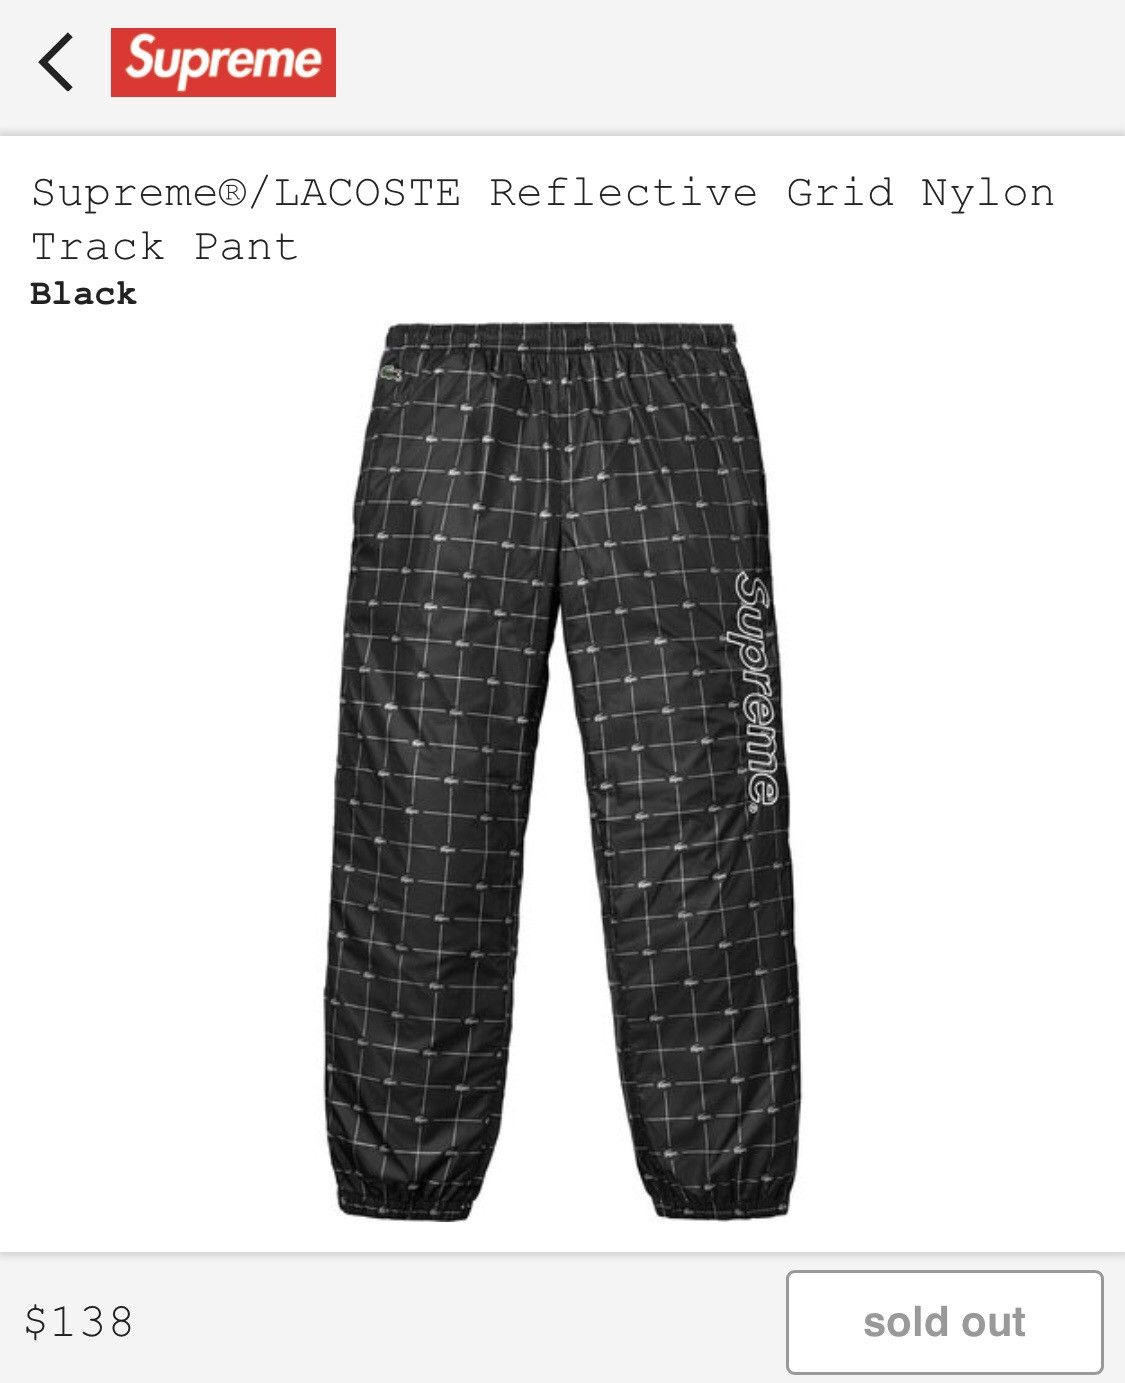 Supreme Supreme Lacoste Reflective Grid Nylon Track Pants | Grailed